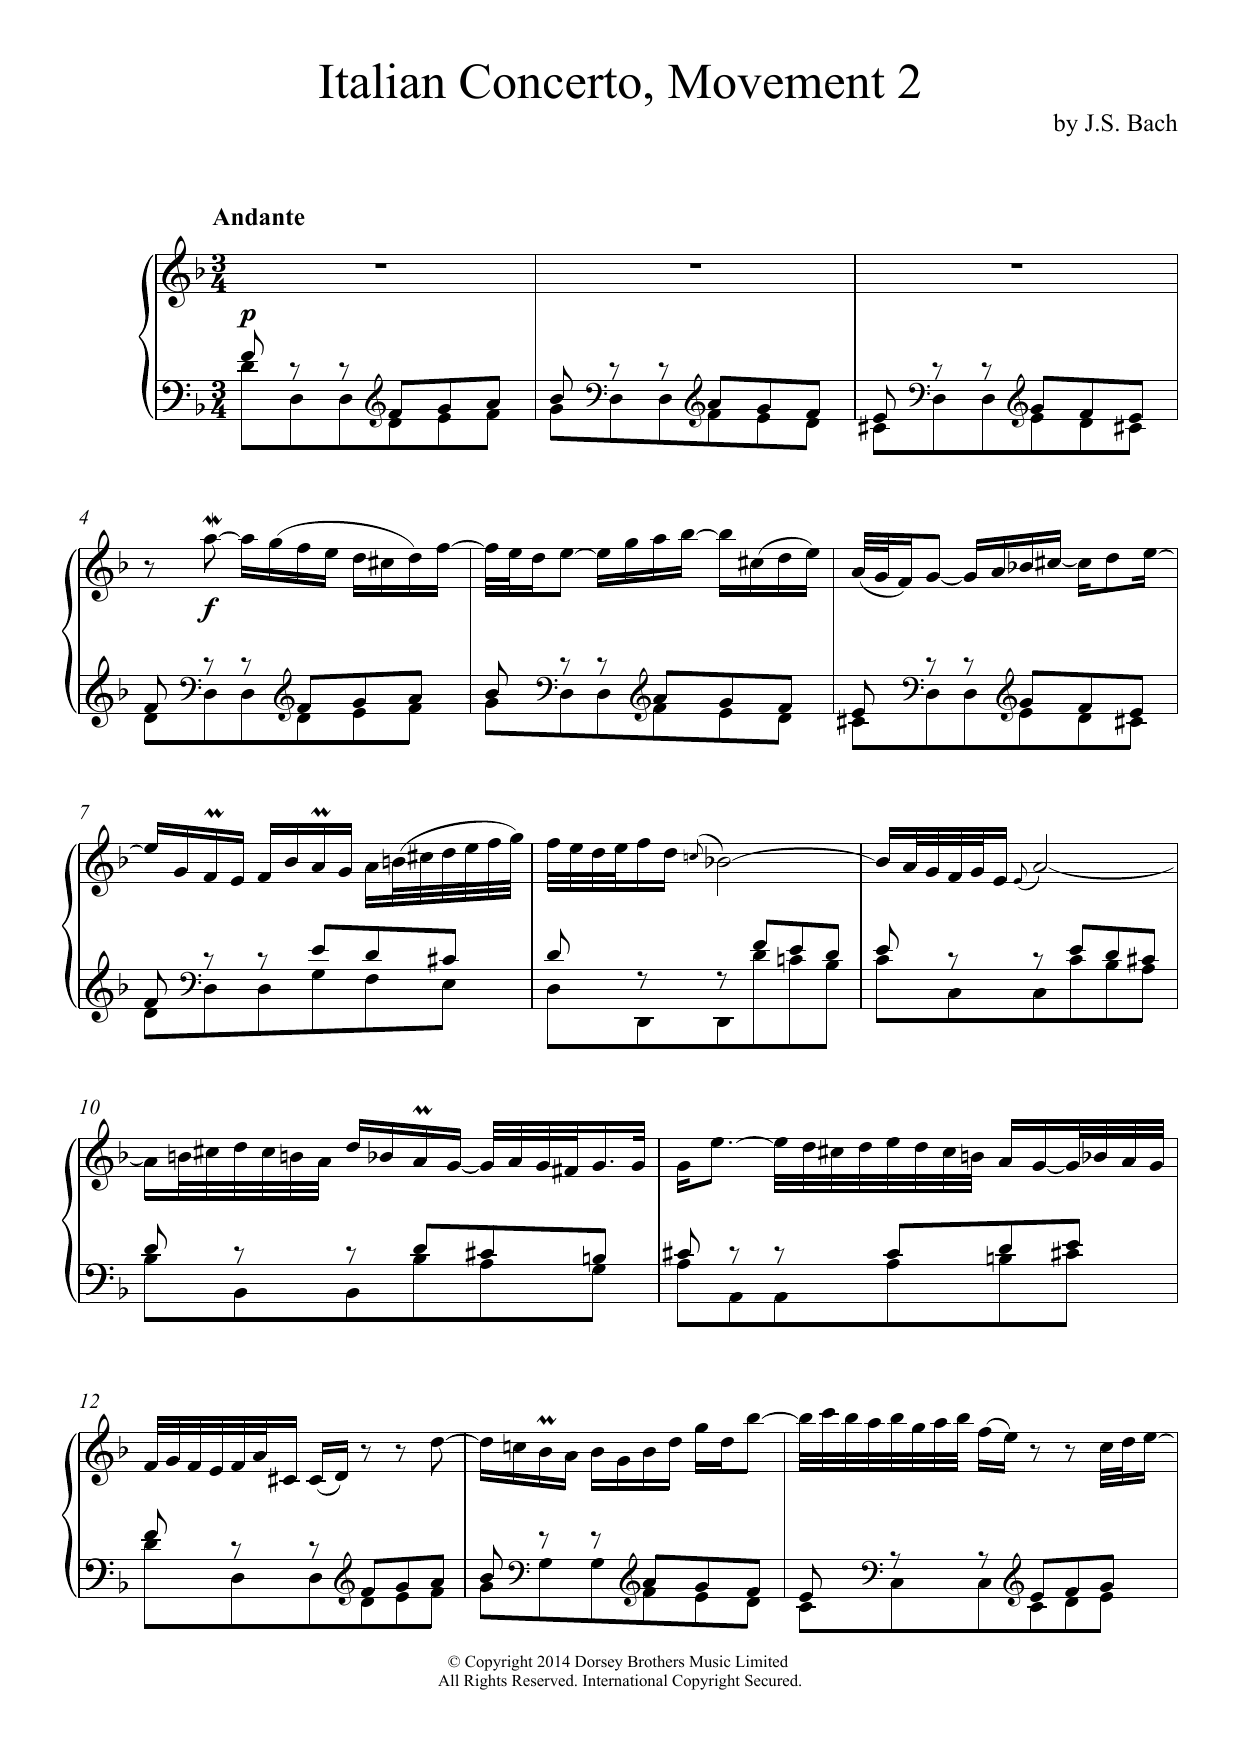 Johann Sebastian Bach Italian Concerto (2nd Movement: Andante) Sheet Music Notes & Chords for Piano - Download or Print PDF